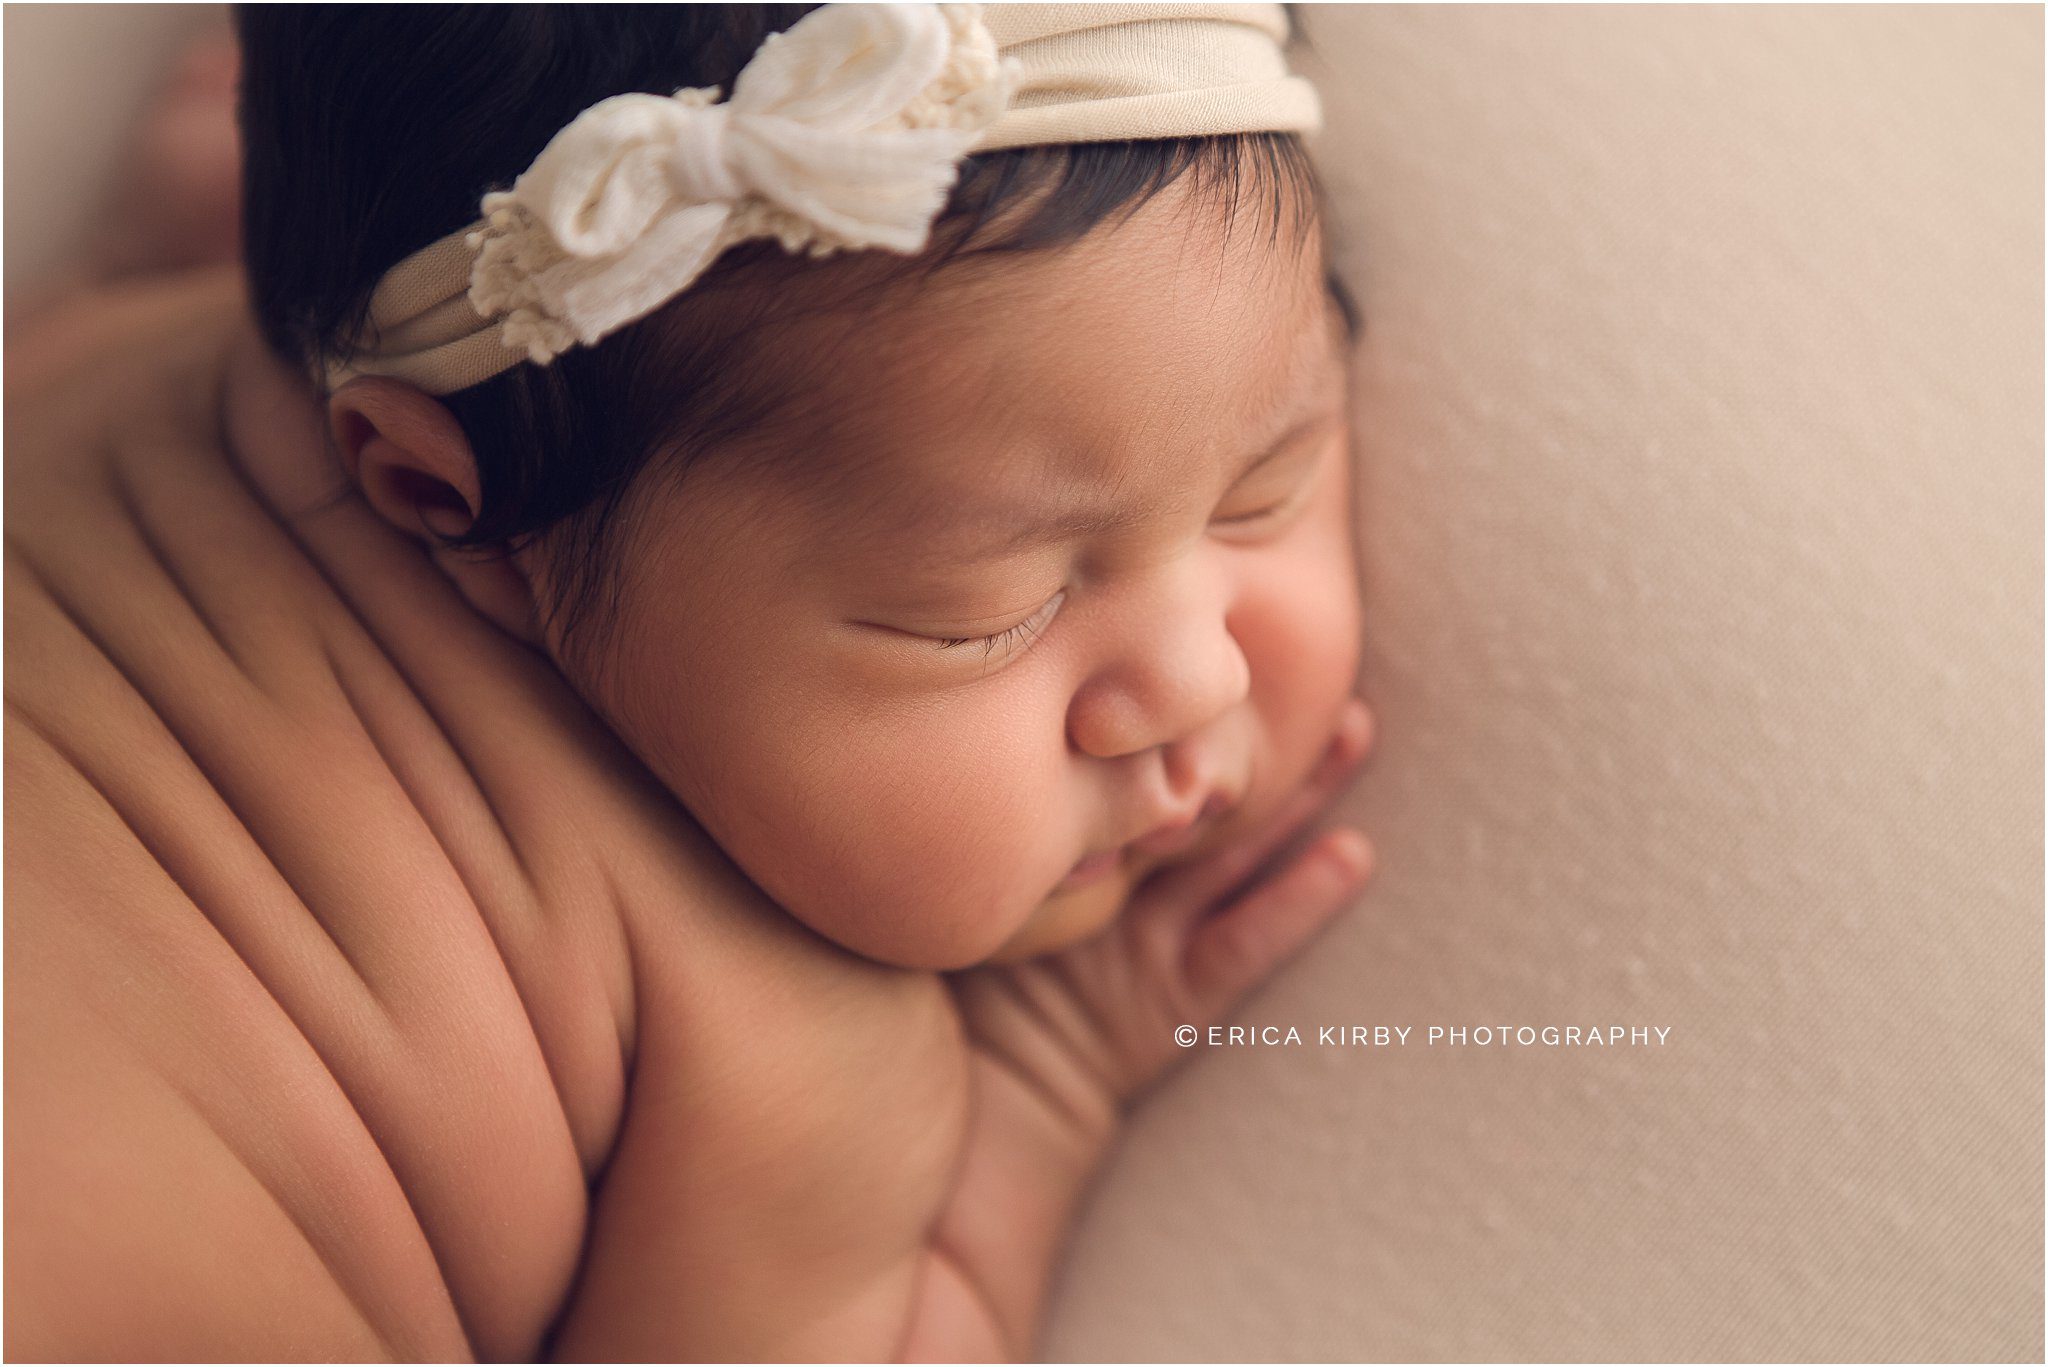 Newborn Photo Session Bentonville AR - hispanic baby girl newborn photography - erica kirby photography